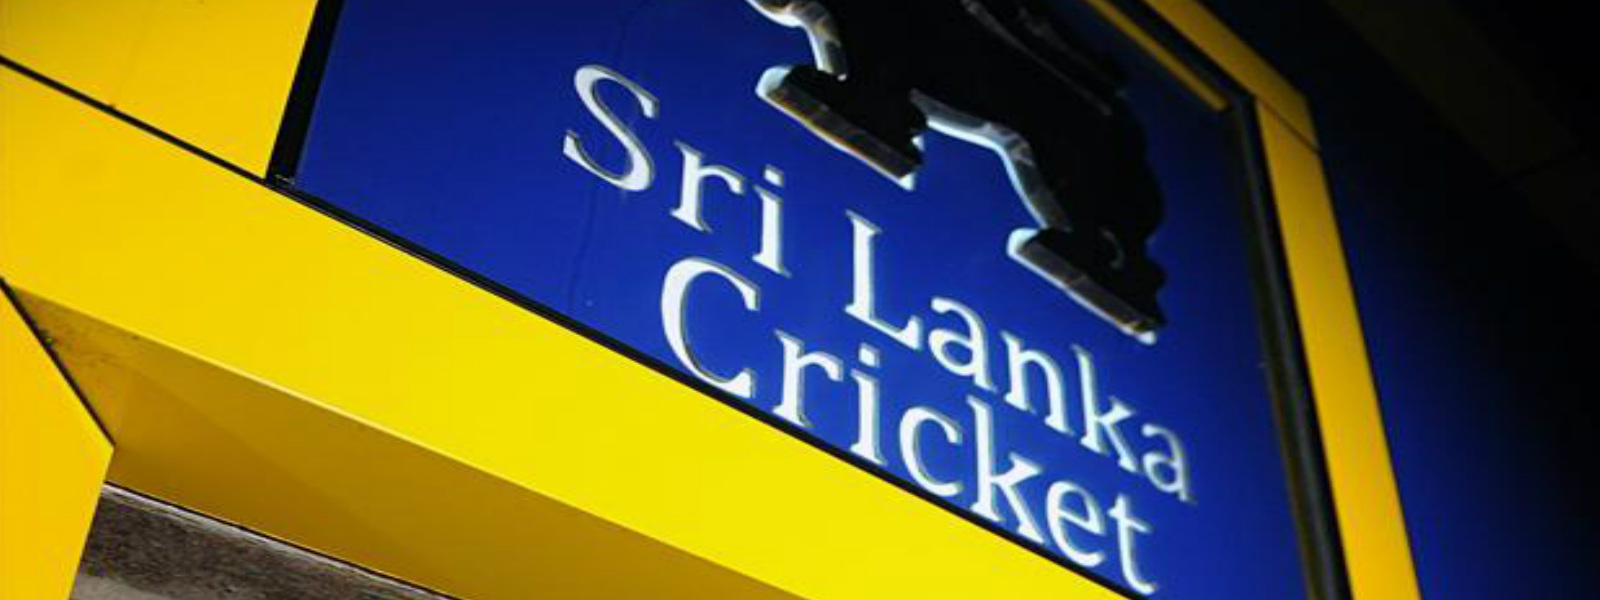 Sri Lanka Cricket in spotlight over election